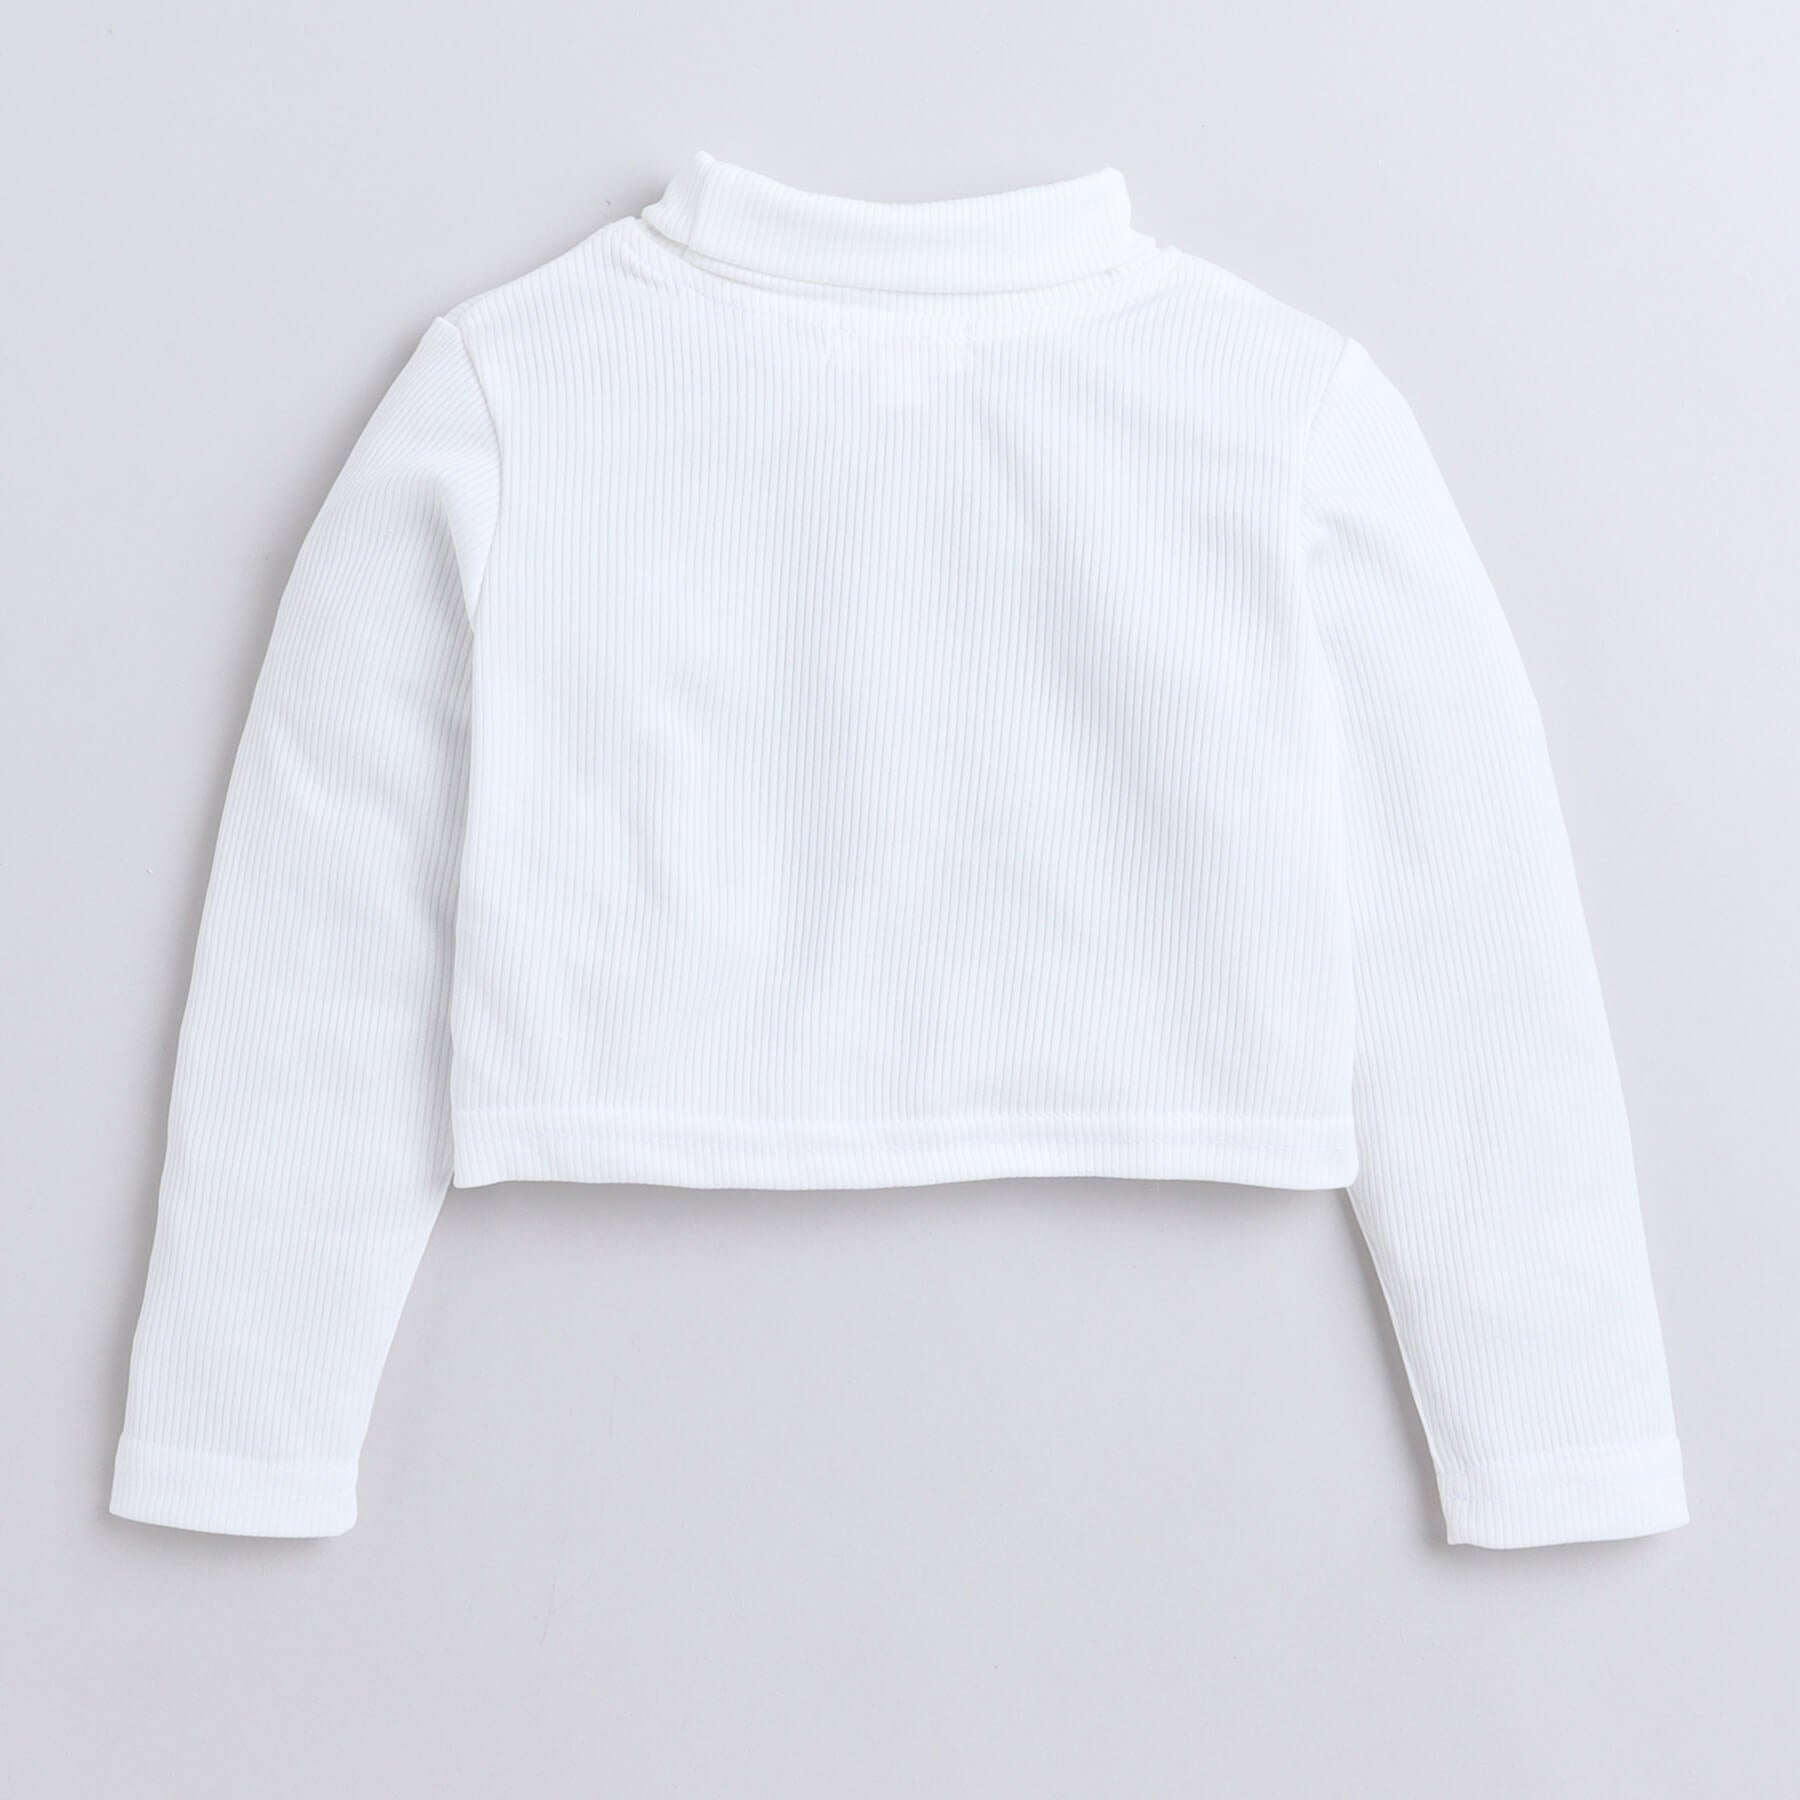 Taffykids full sleeves crop top and geometric printed cargo pant set-white/multi